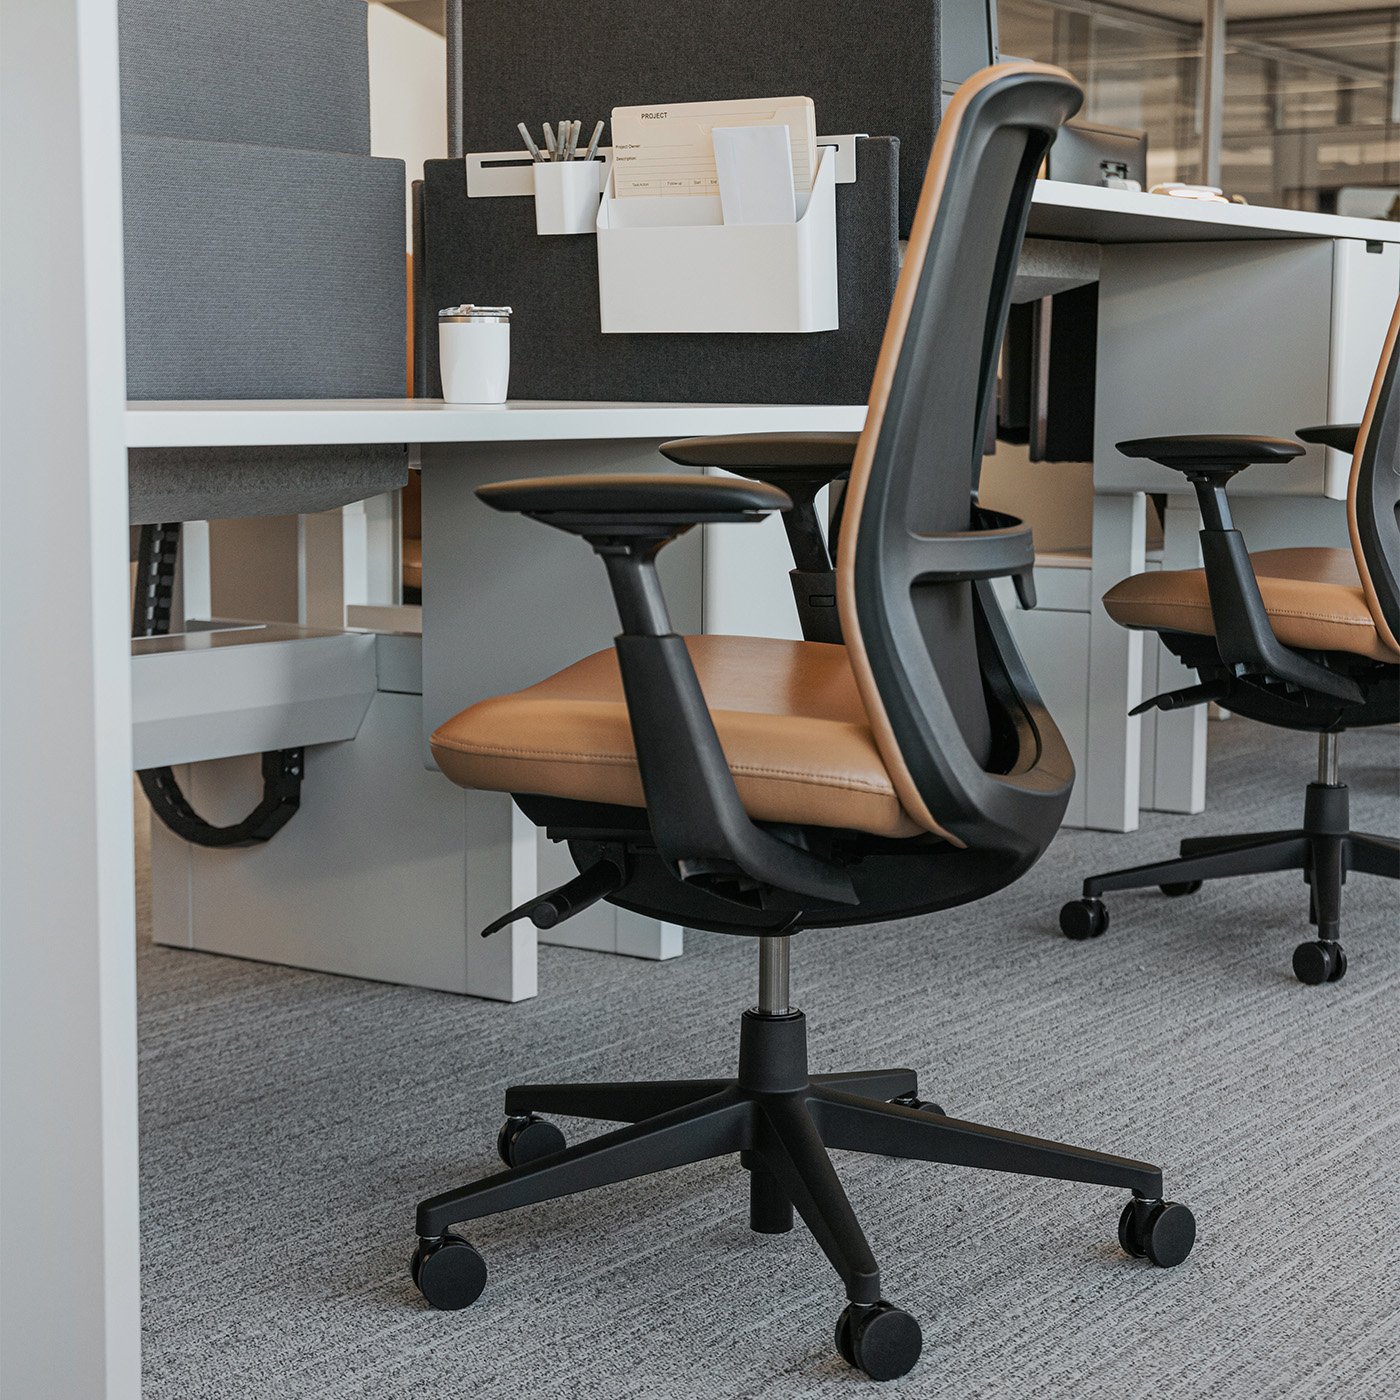 Haworth Soji XL chair in a office space